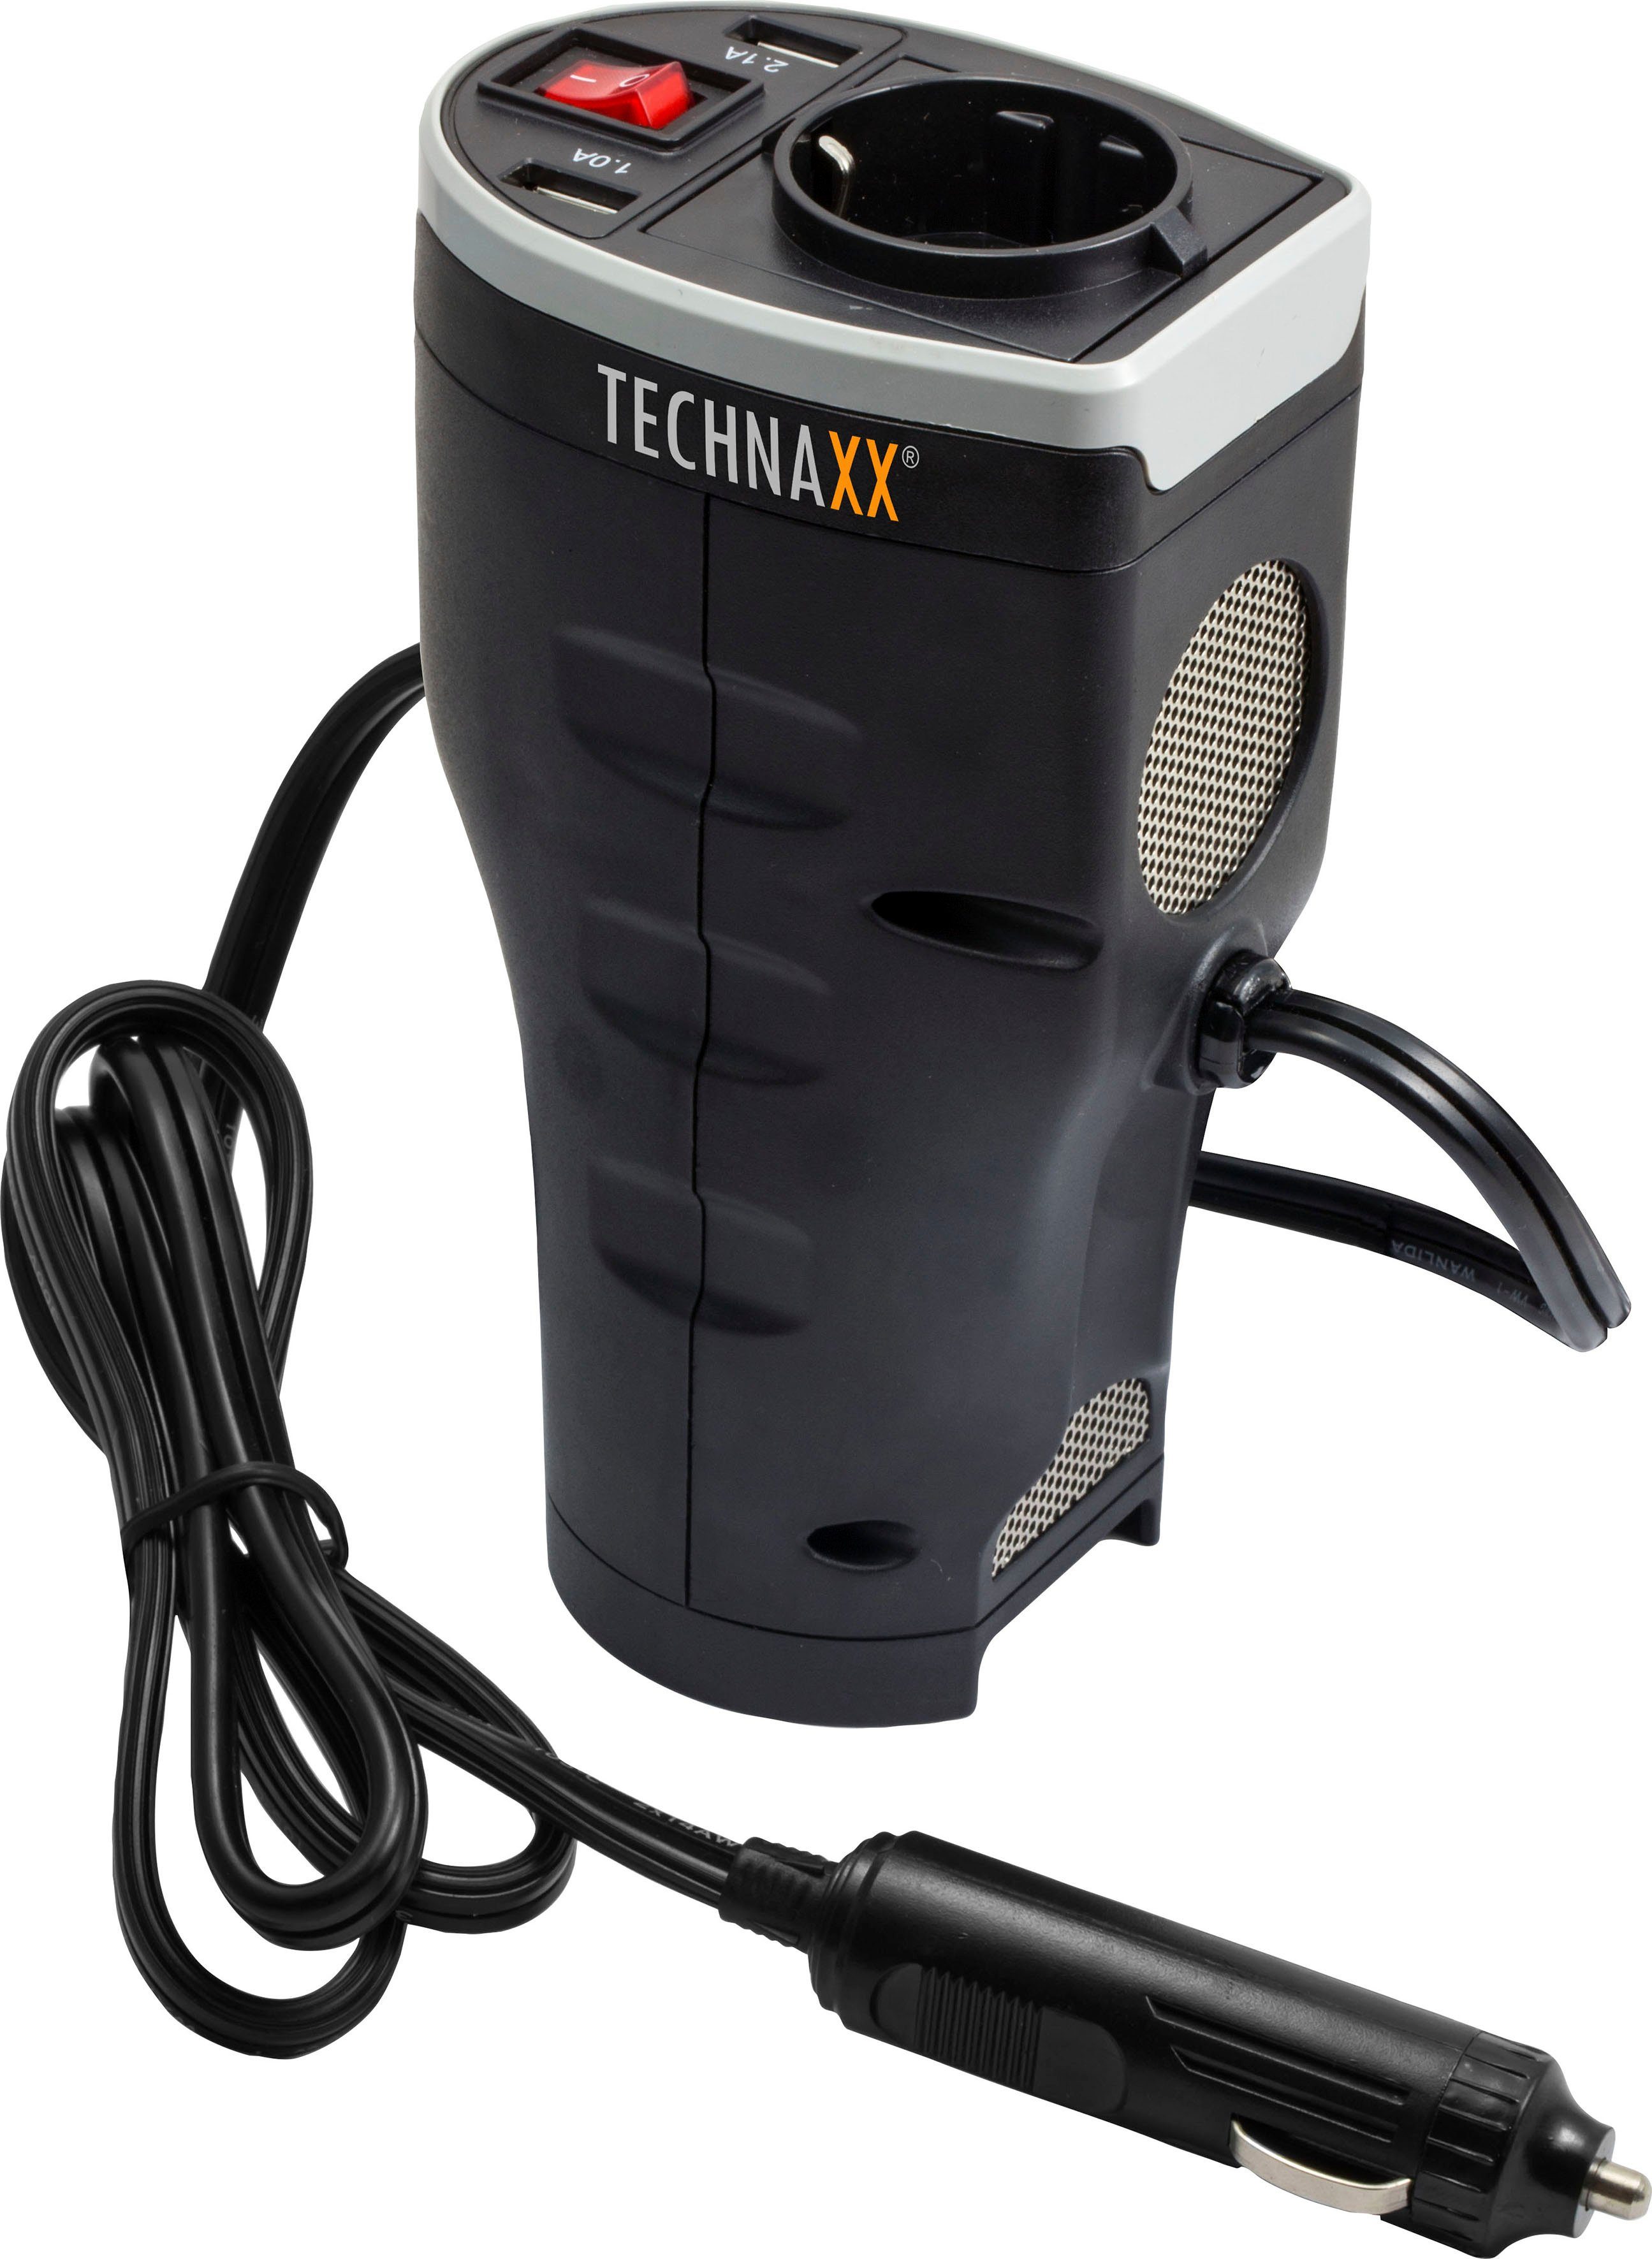 Technaxx Spannungswandler KFZ-SPANNUNGSWANDLER, 12 V DC-Batterieleistung zu  Standard 230V AC-Netzspannung, Schutzkontaktstecker- Anschluss  (AC-Ausgang)mit beleuchtetem Ein-/Ausschalter